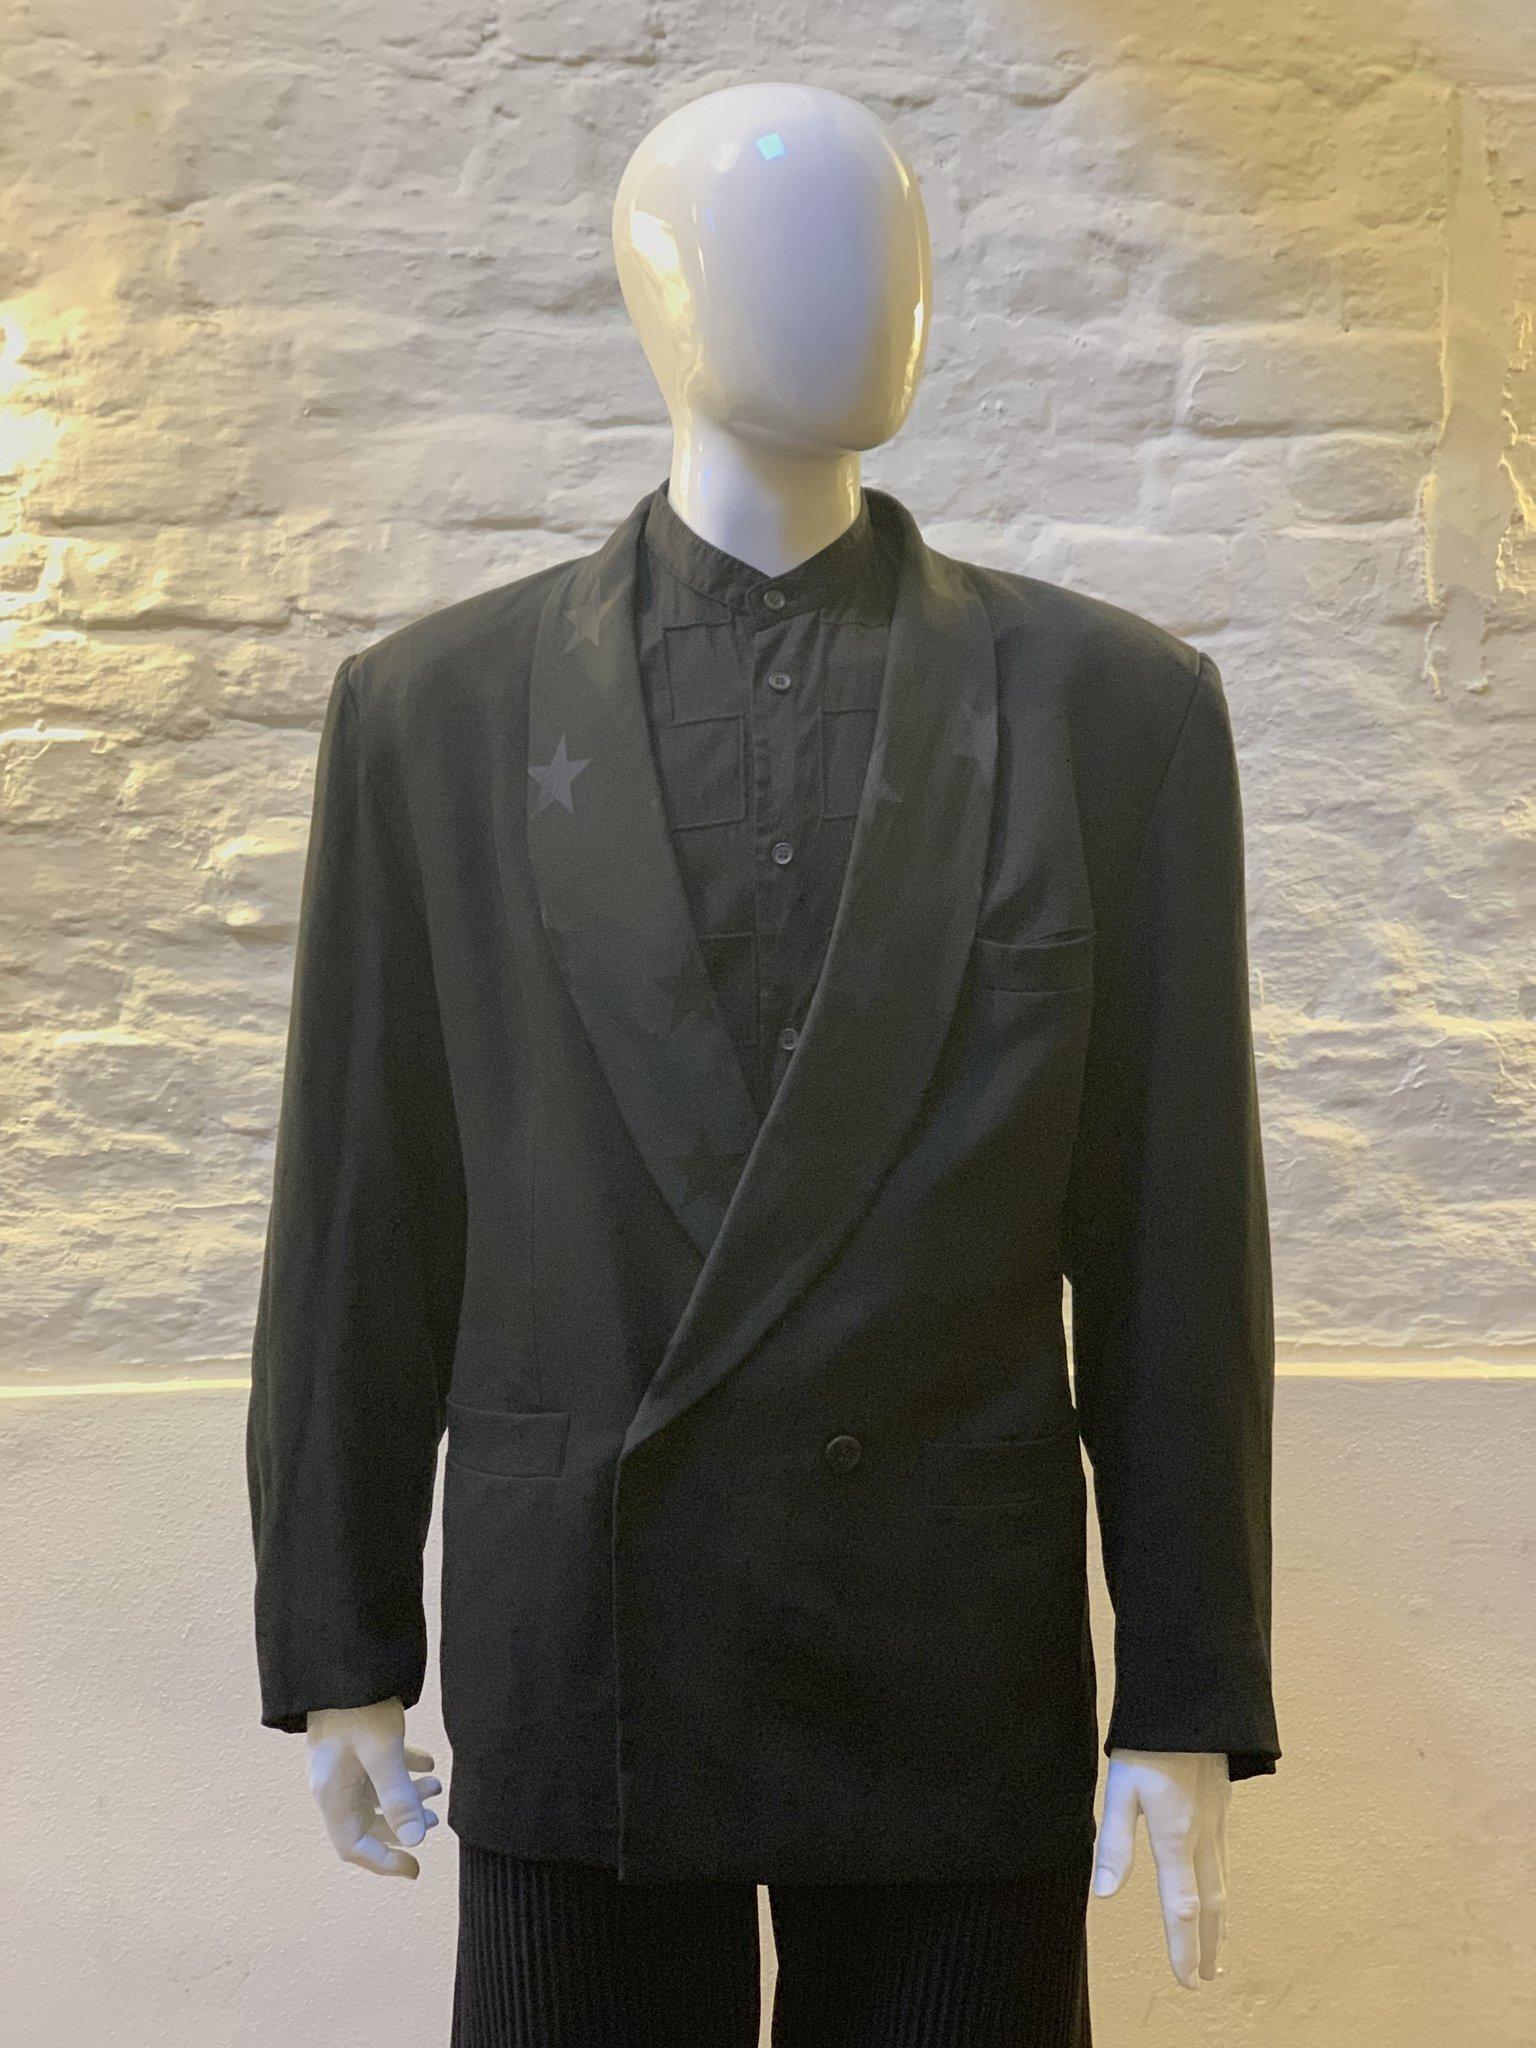 80s Custom Tuxedo Jacket with Star Detailing.